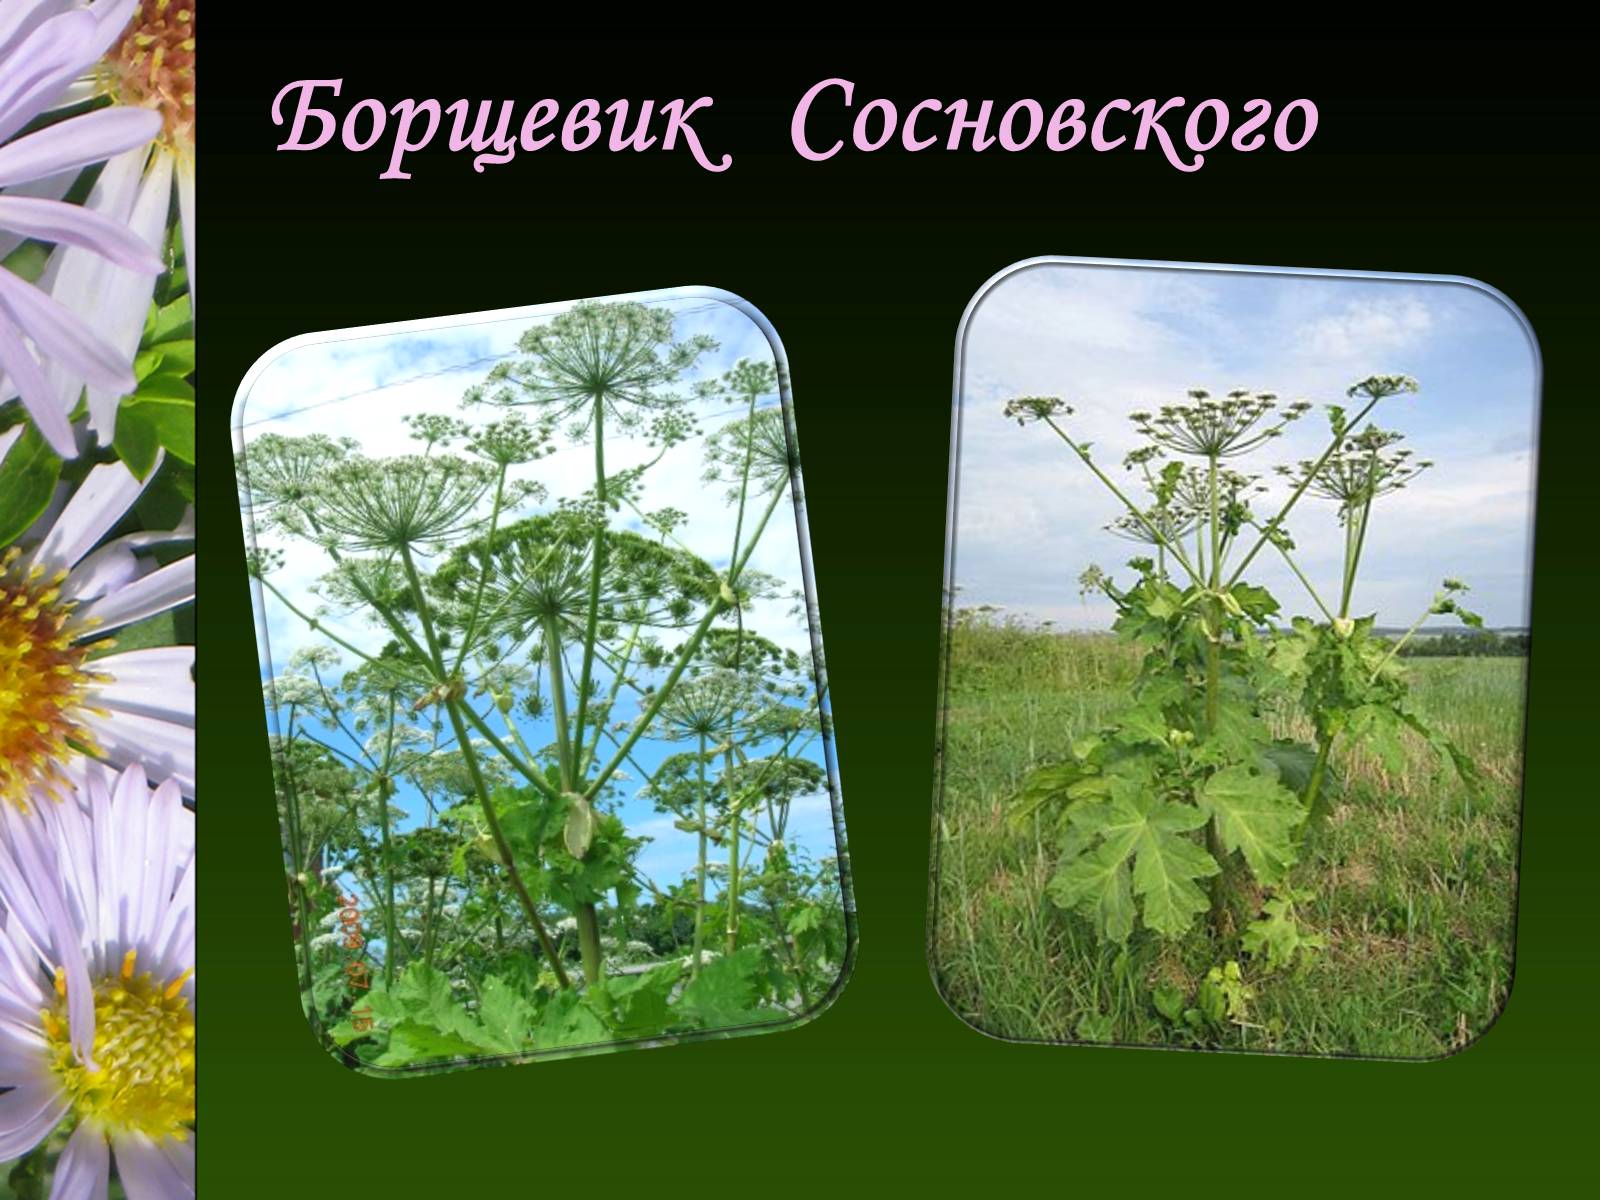 Презентація на тему «Ядовитые растения Украины» - Слайд #3